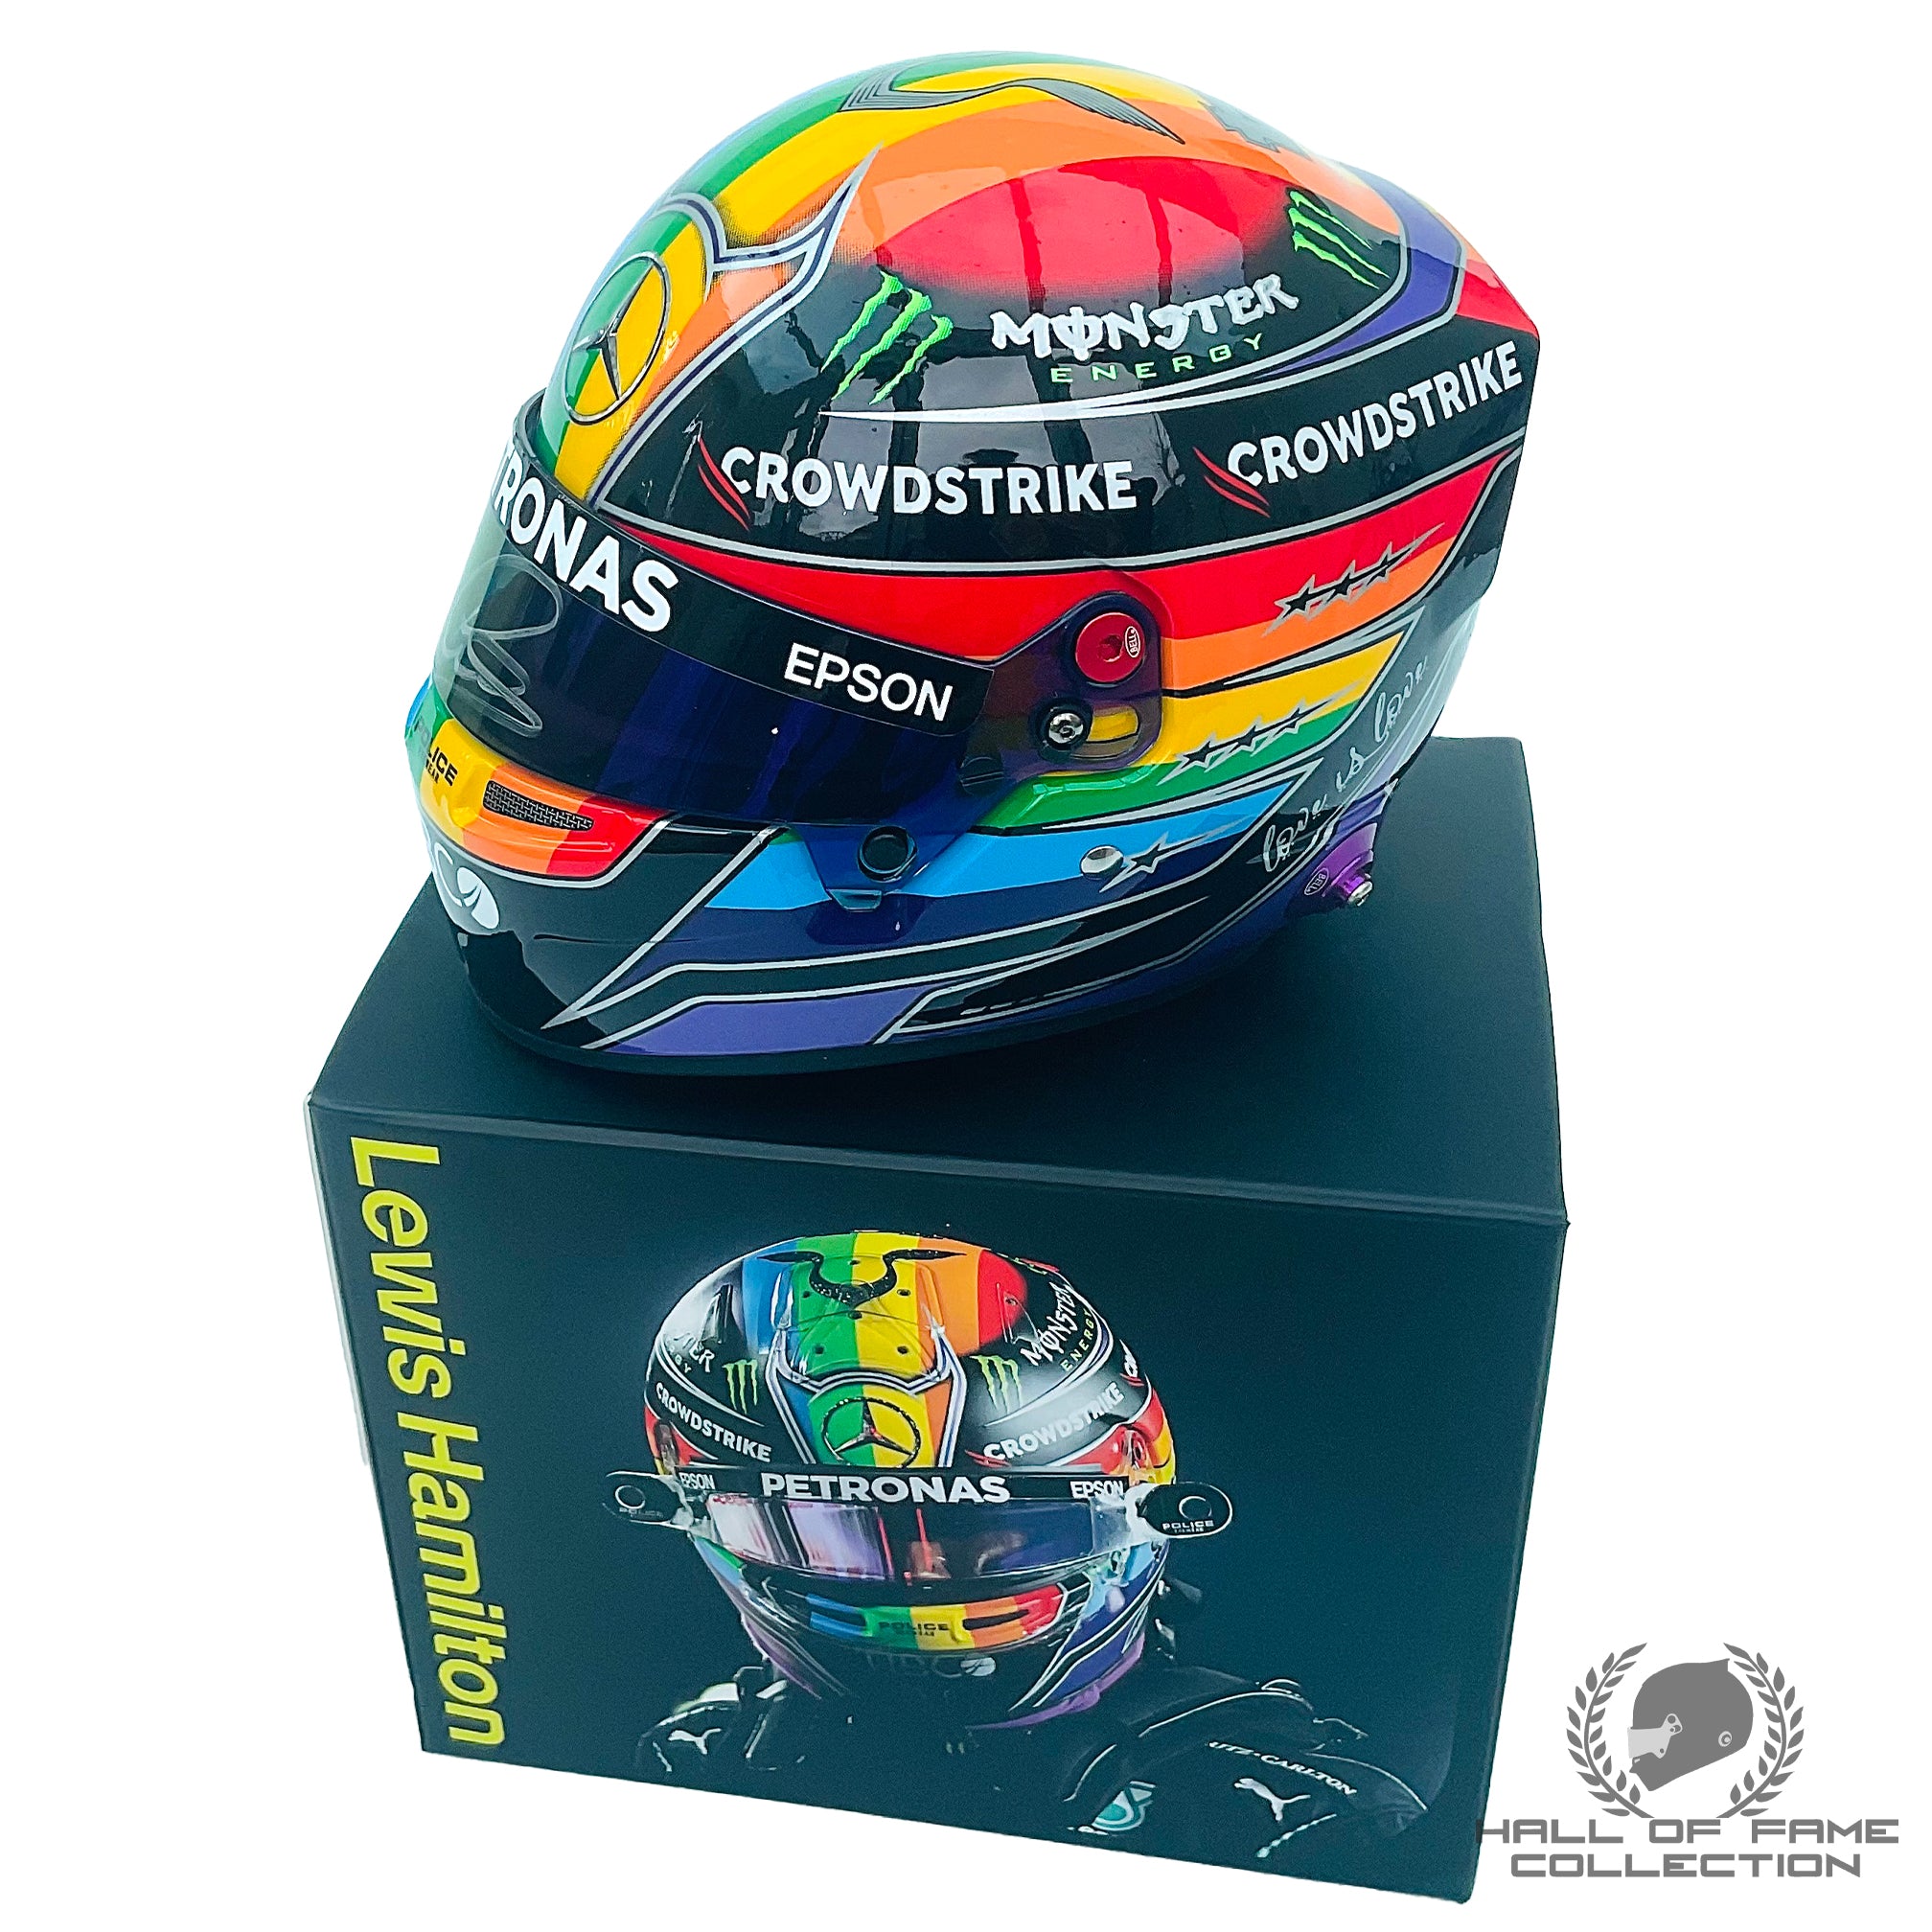 2021 Lewis Hamilton Signed 1/2 Scale Mercedes Benz F1 Helmet